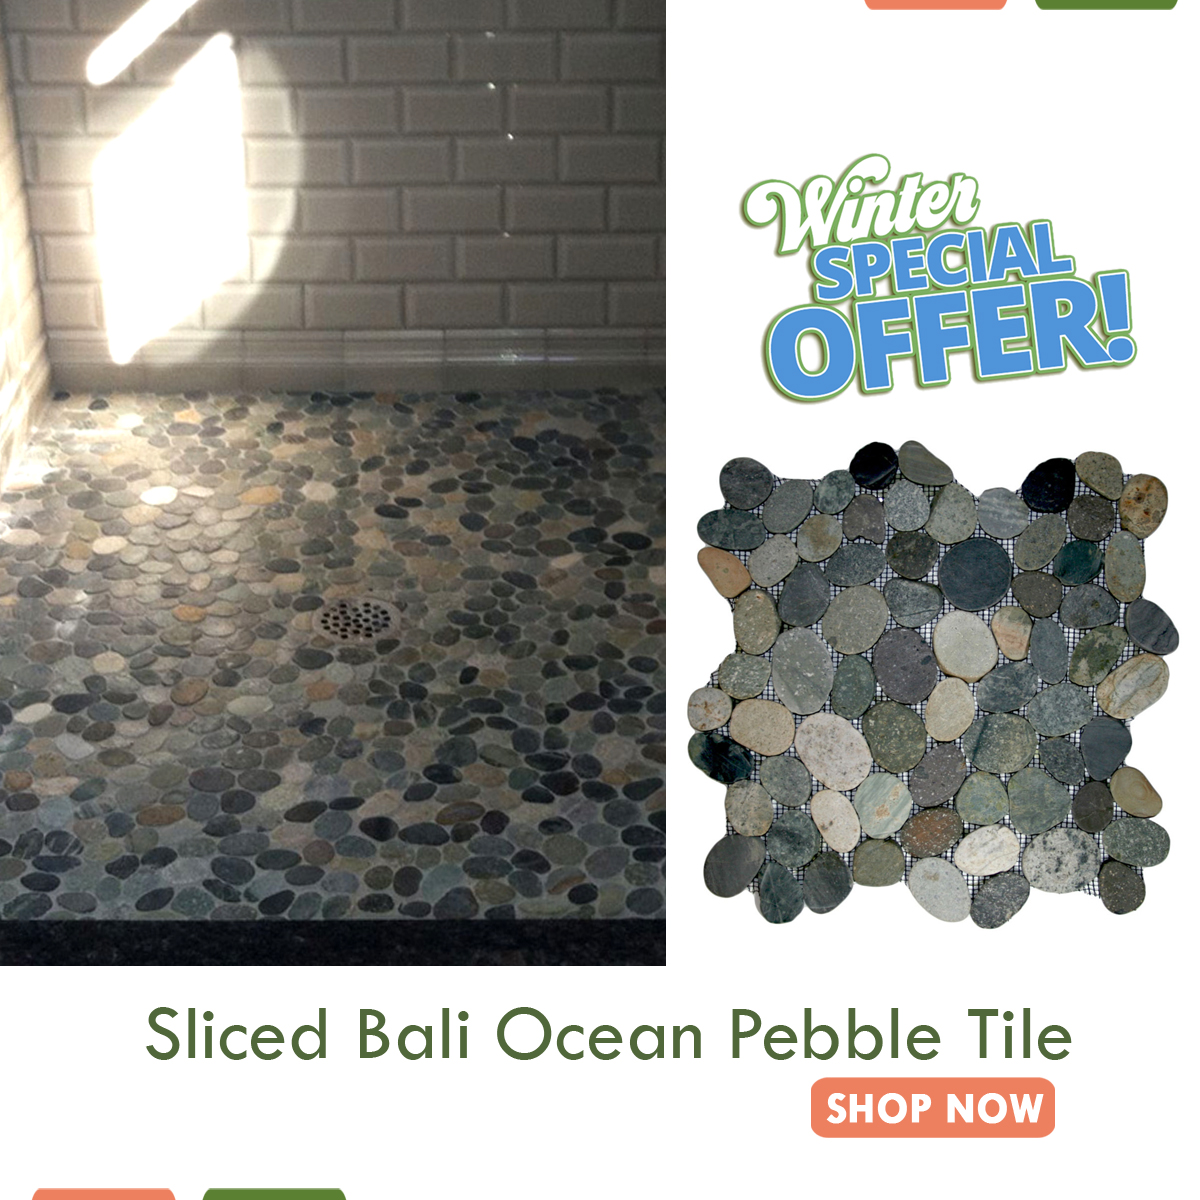 Sliced Bali Ocean Pebble Tile